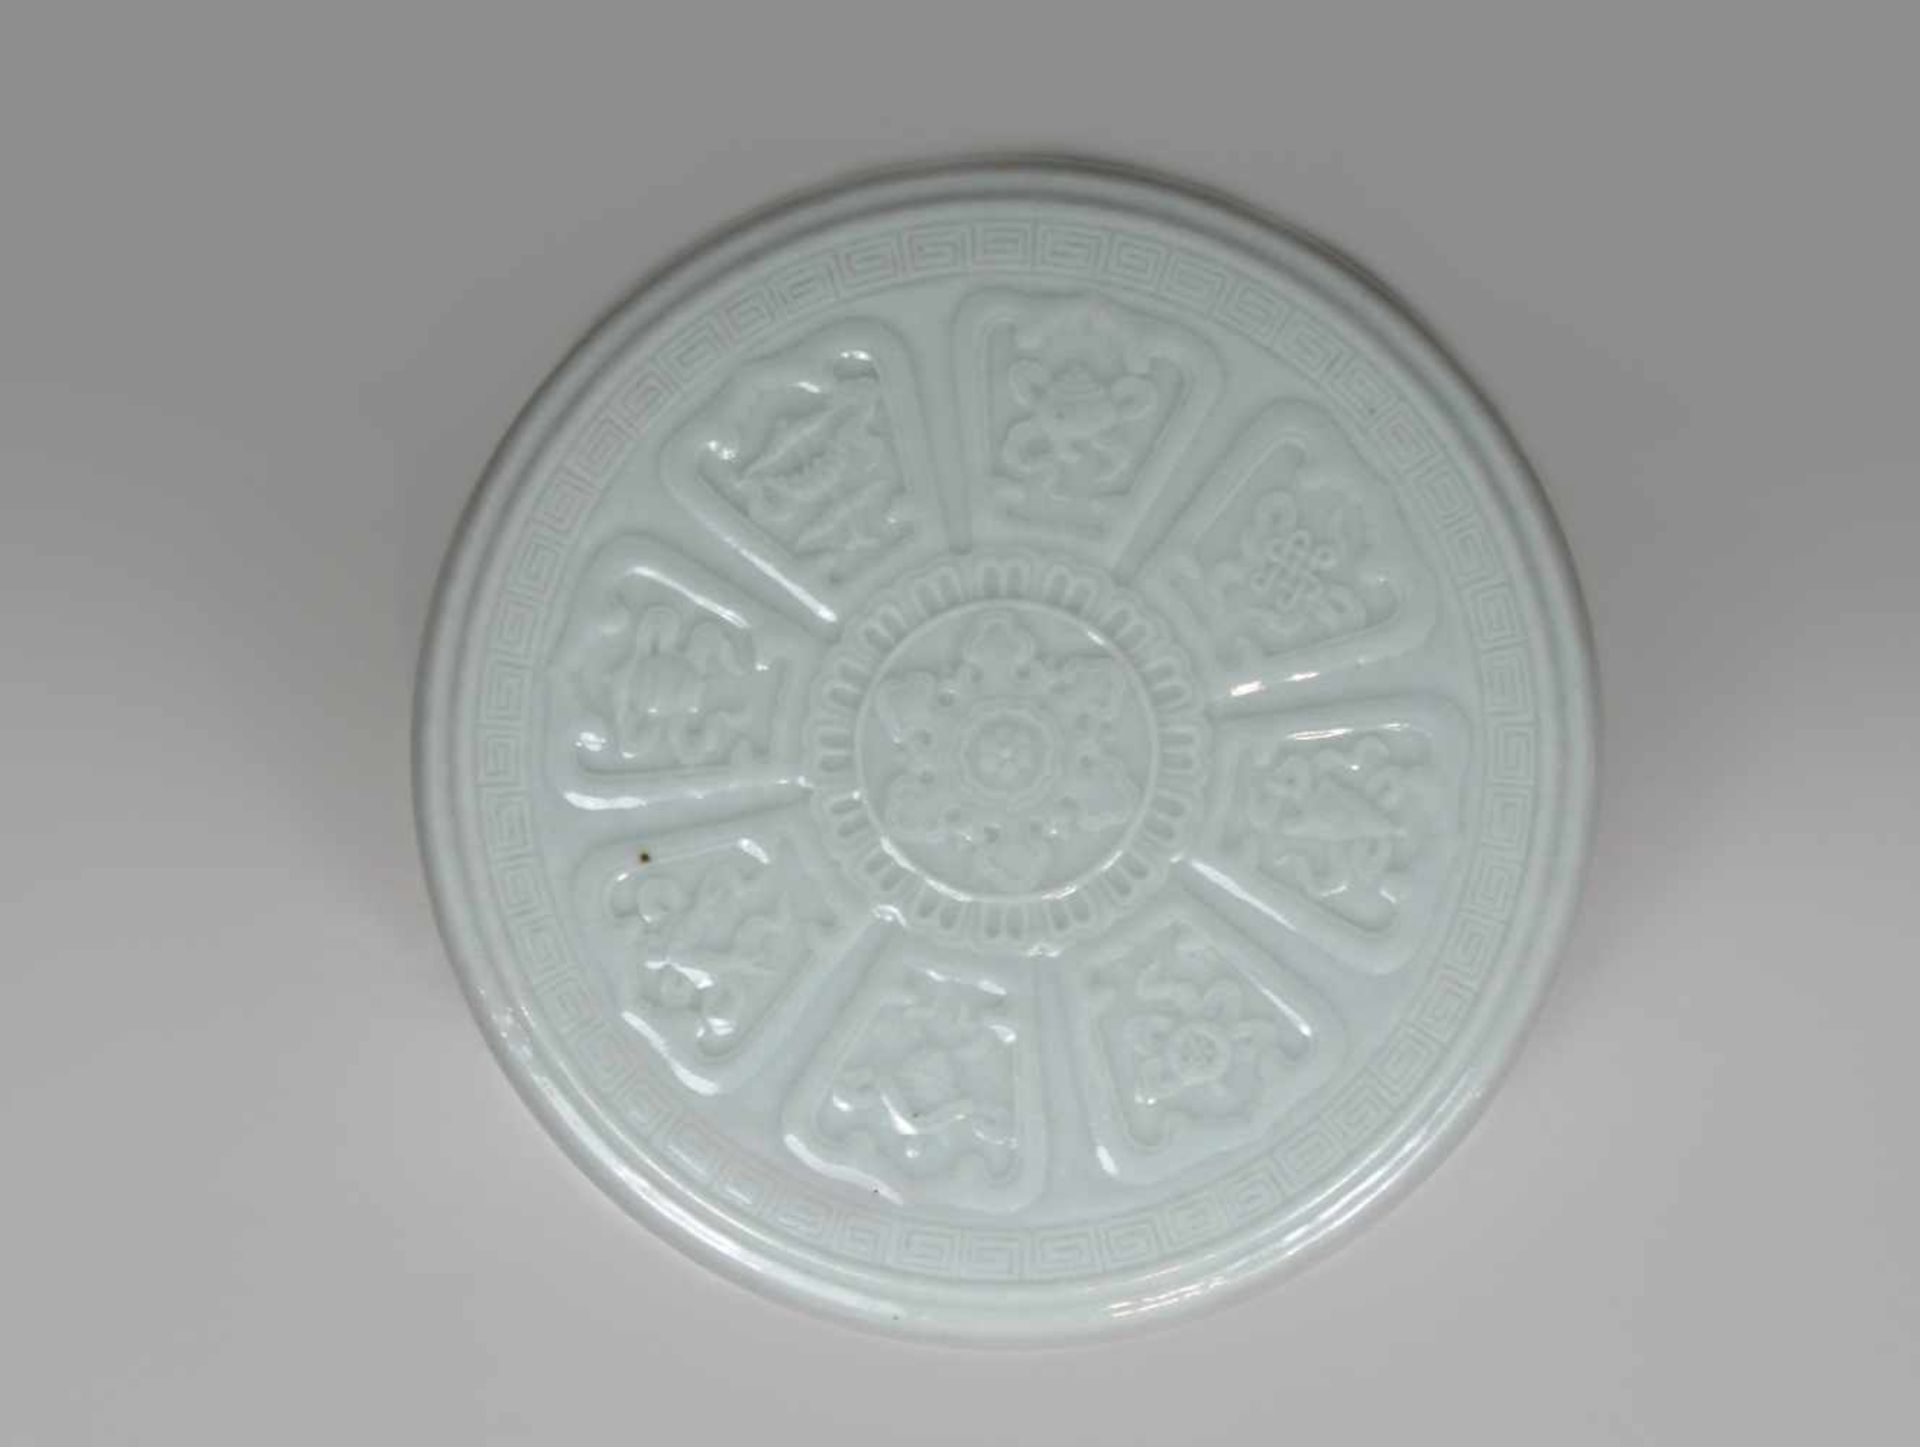 Deckelschale, Seladon Keramik, Ashtamangala-Relief auf Deckel, Qianlong Pressmarke am Boden, Riss - Bild 2 aus 3